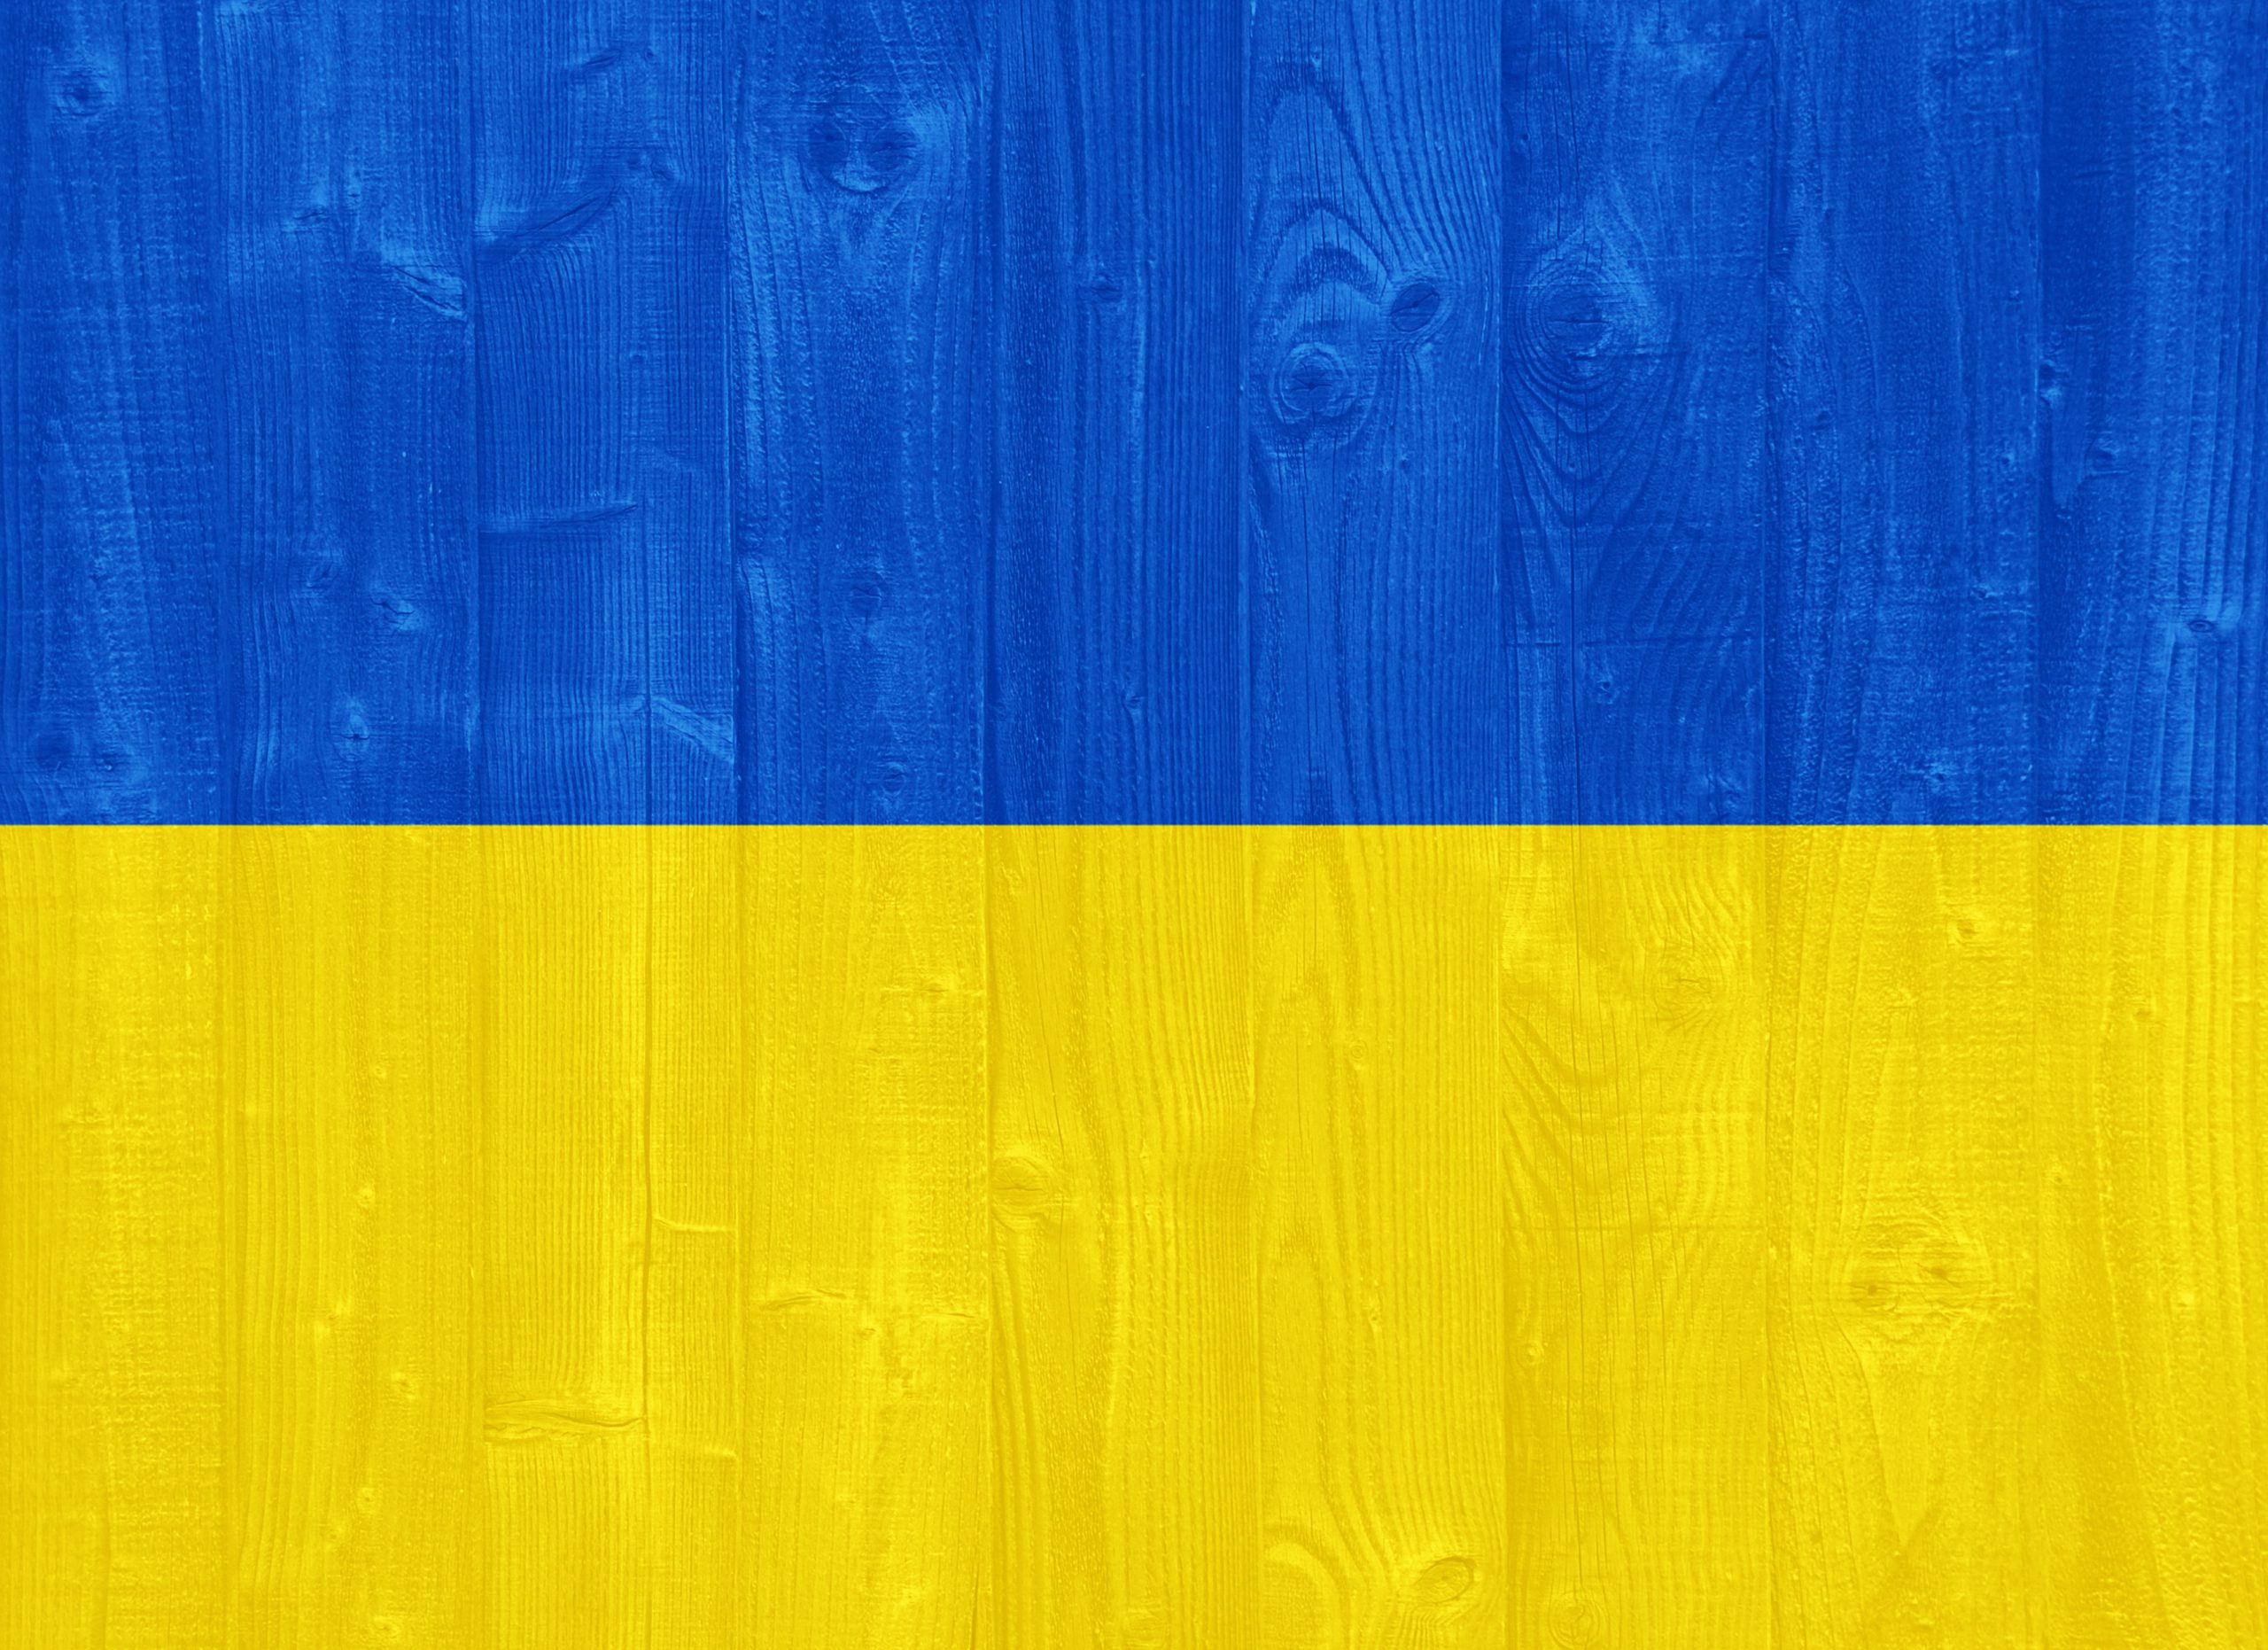 Ukraine blue and yellow flag design